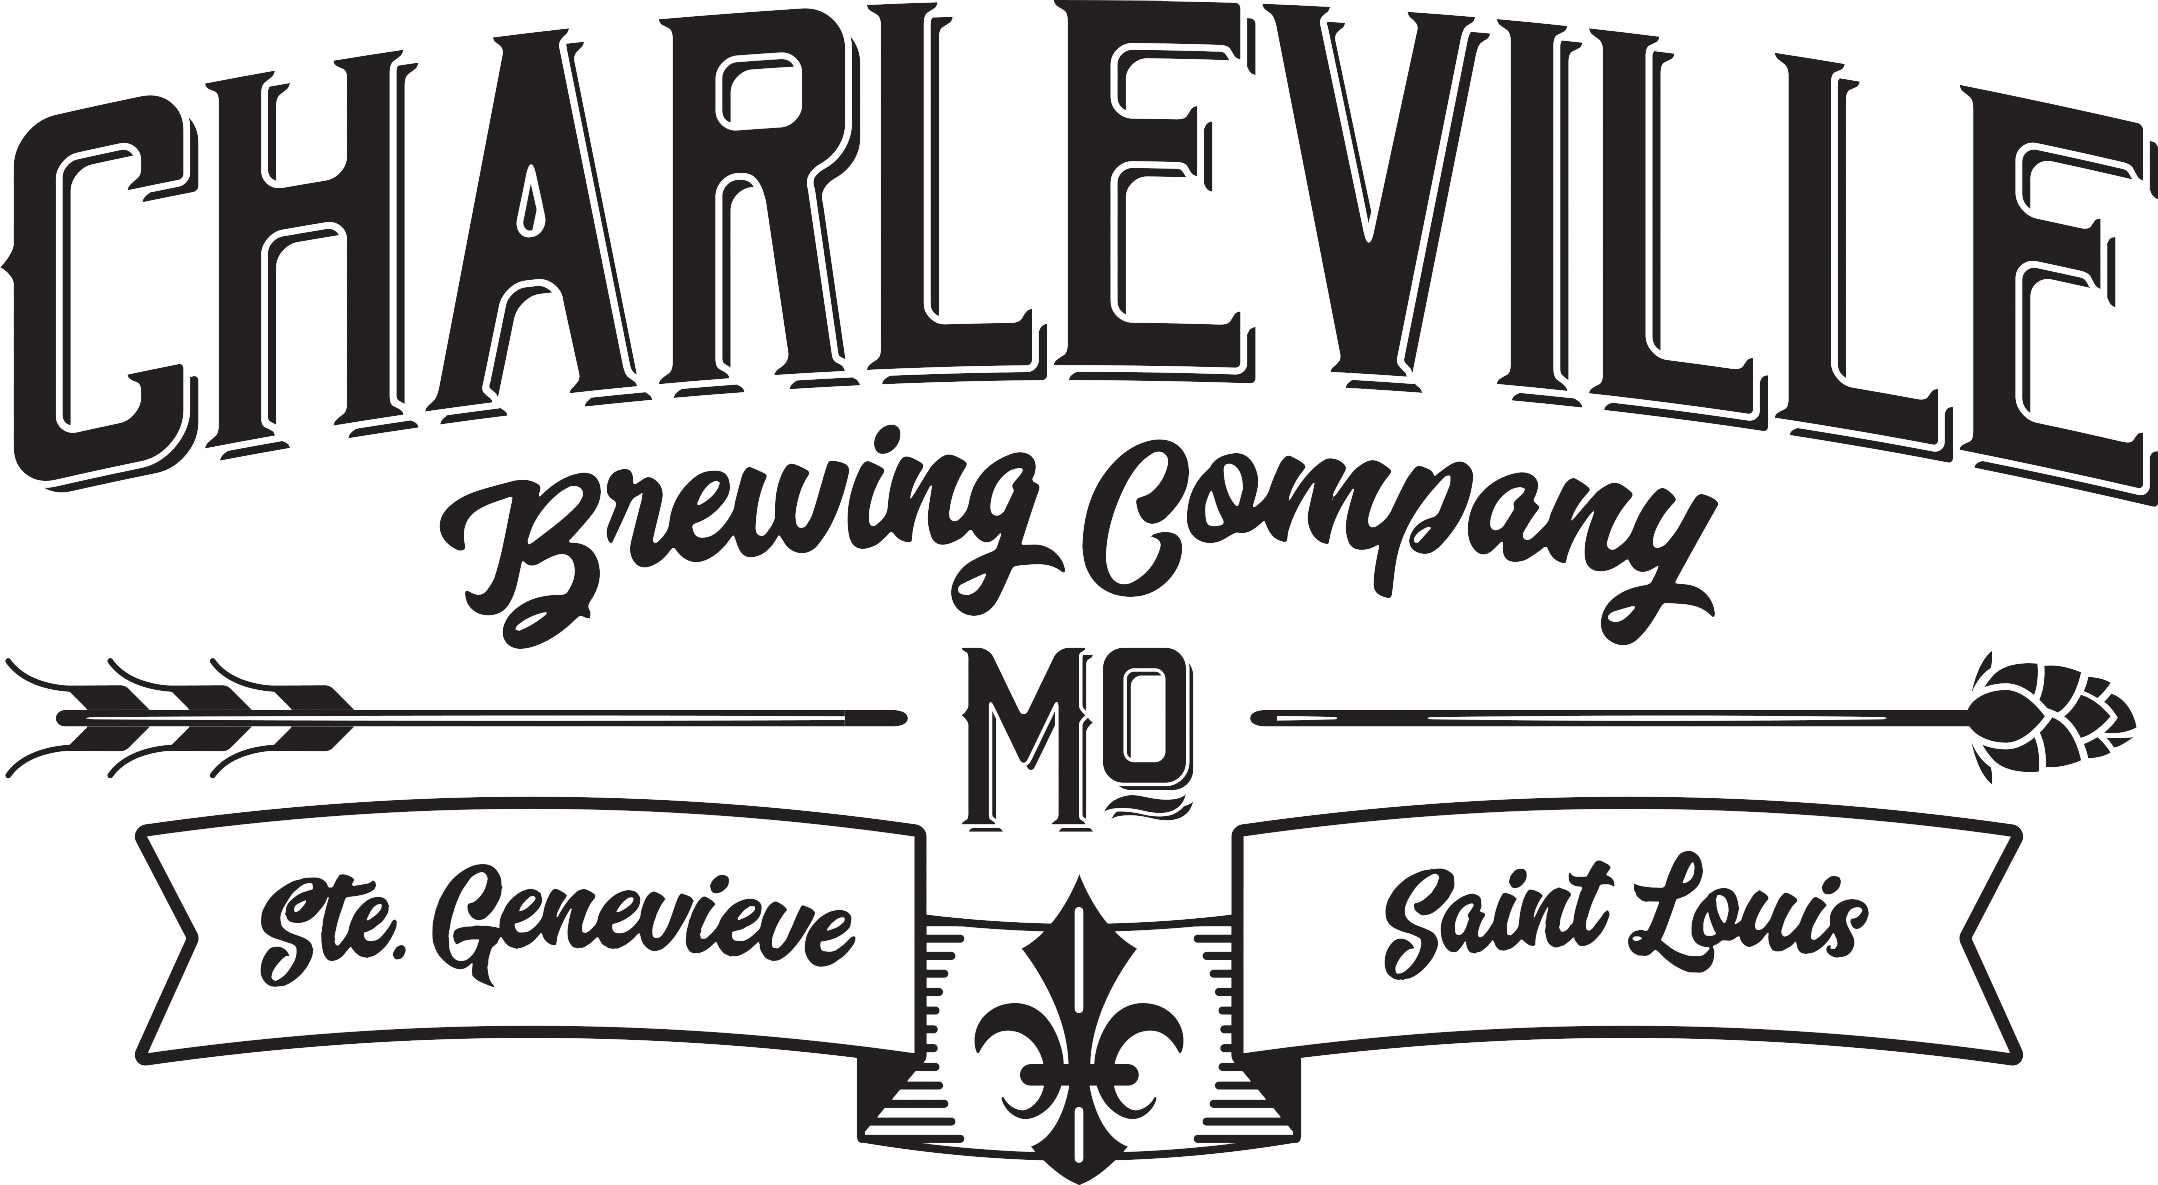 Charleville Vineyard & Microbrewery